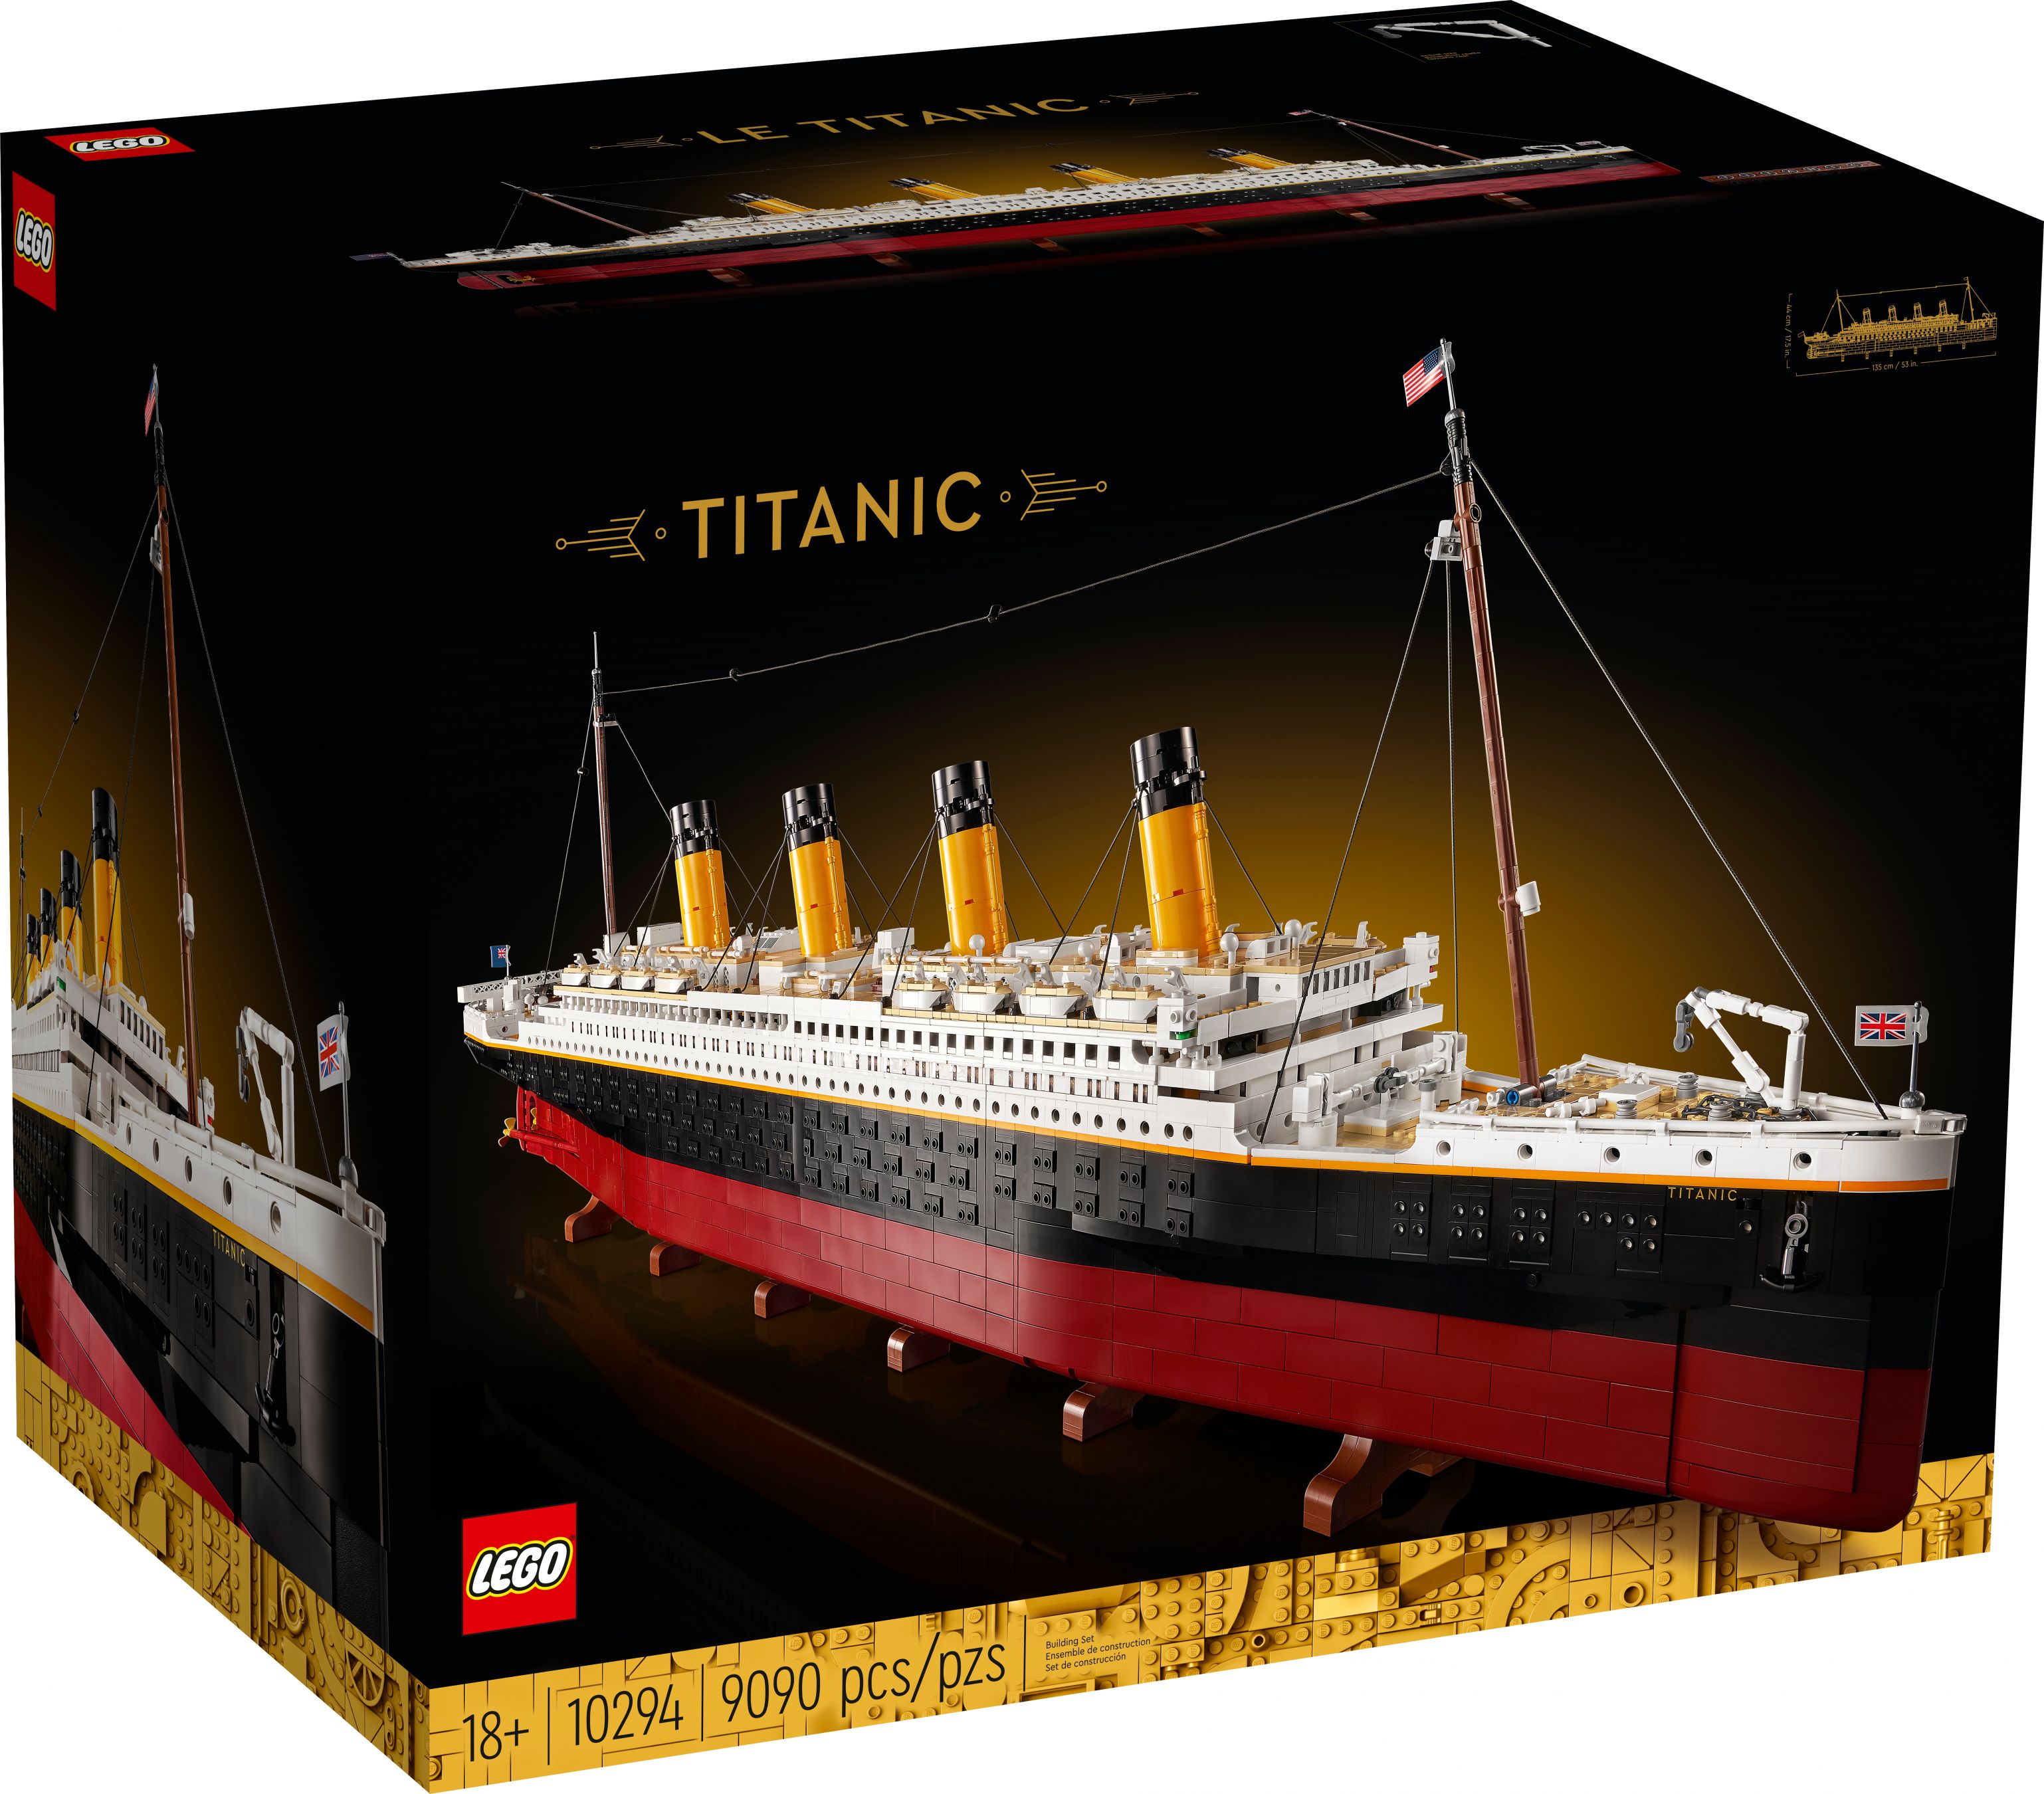 LEGO Advanced Models 10294 LEGO® Titanic LEGO_10294_box1_v39.jpg